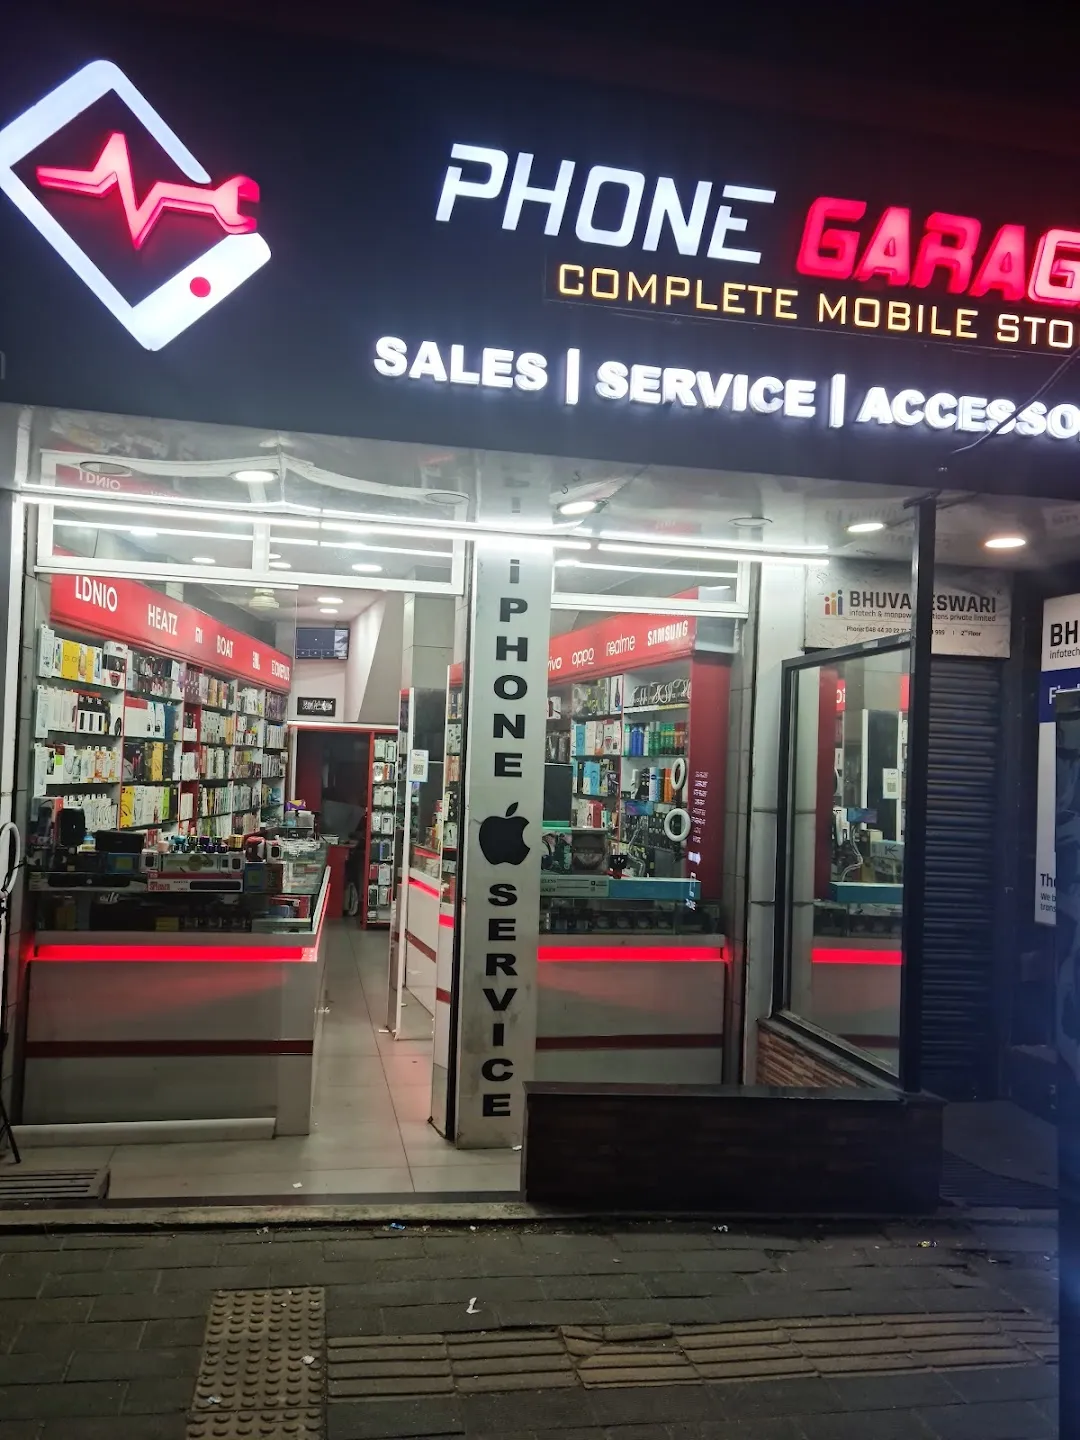 Phone garage